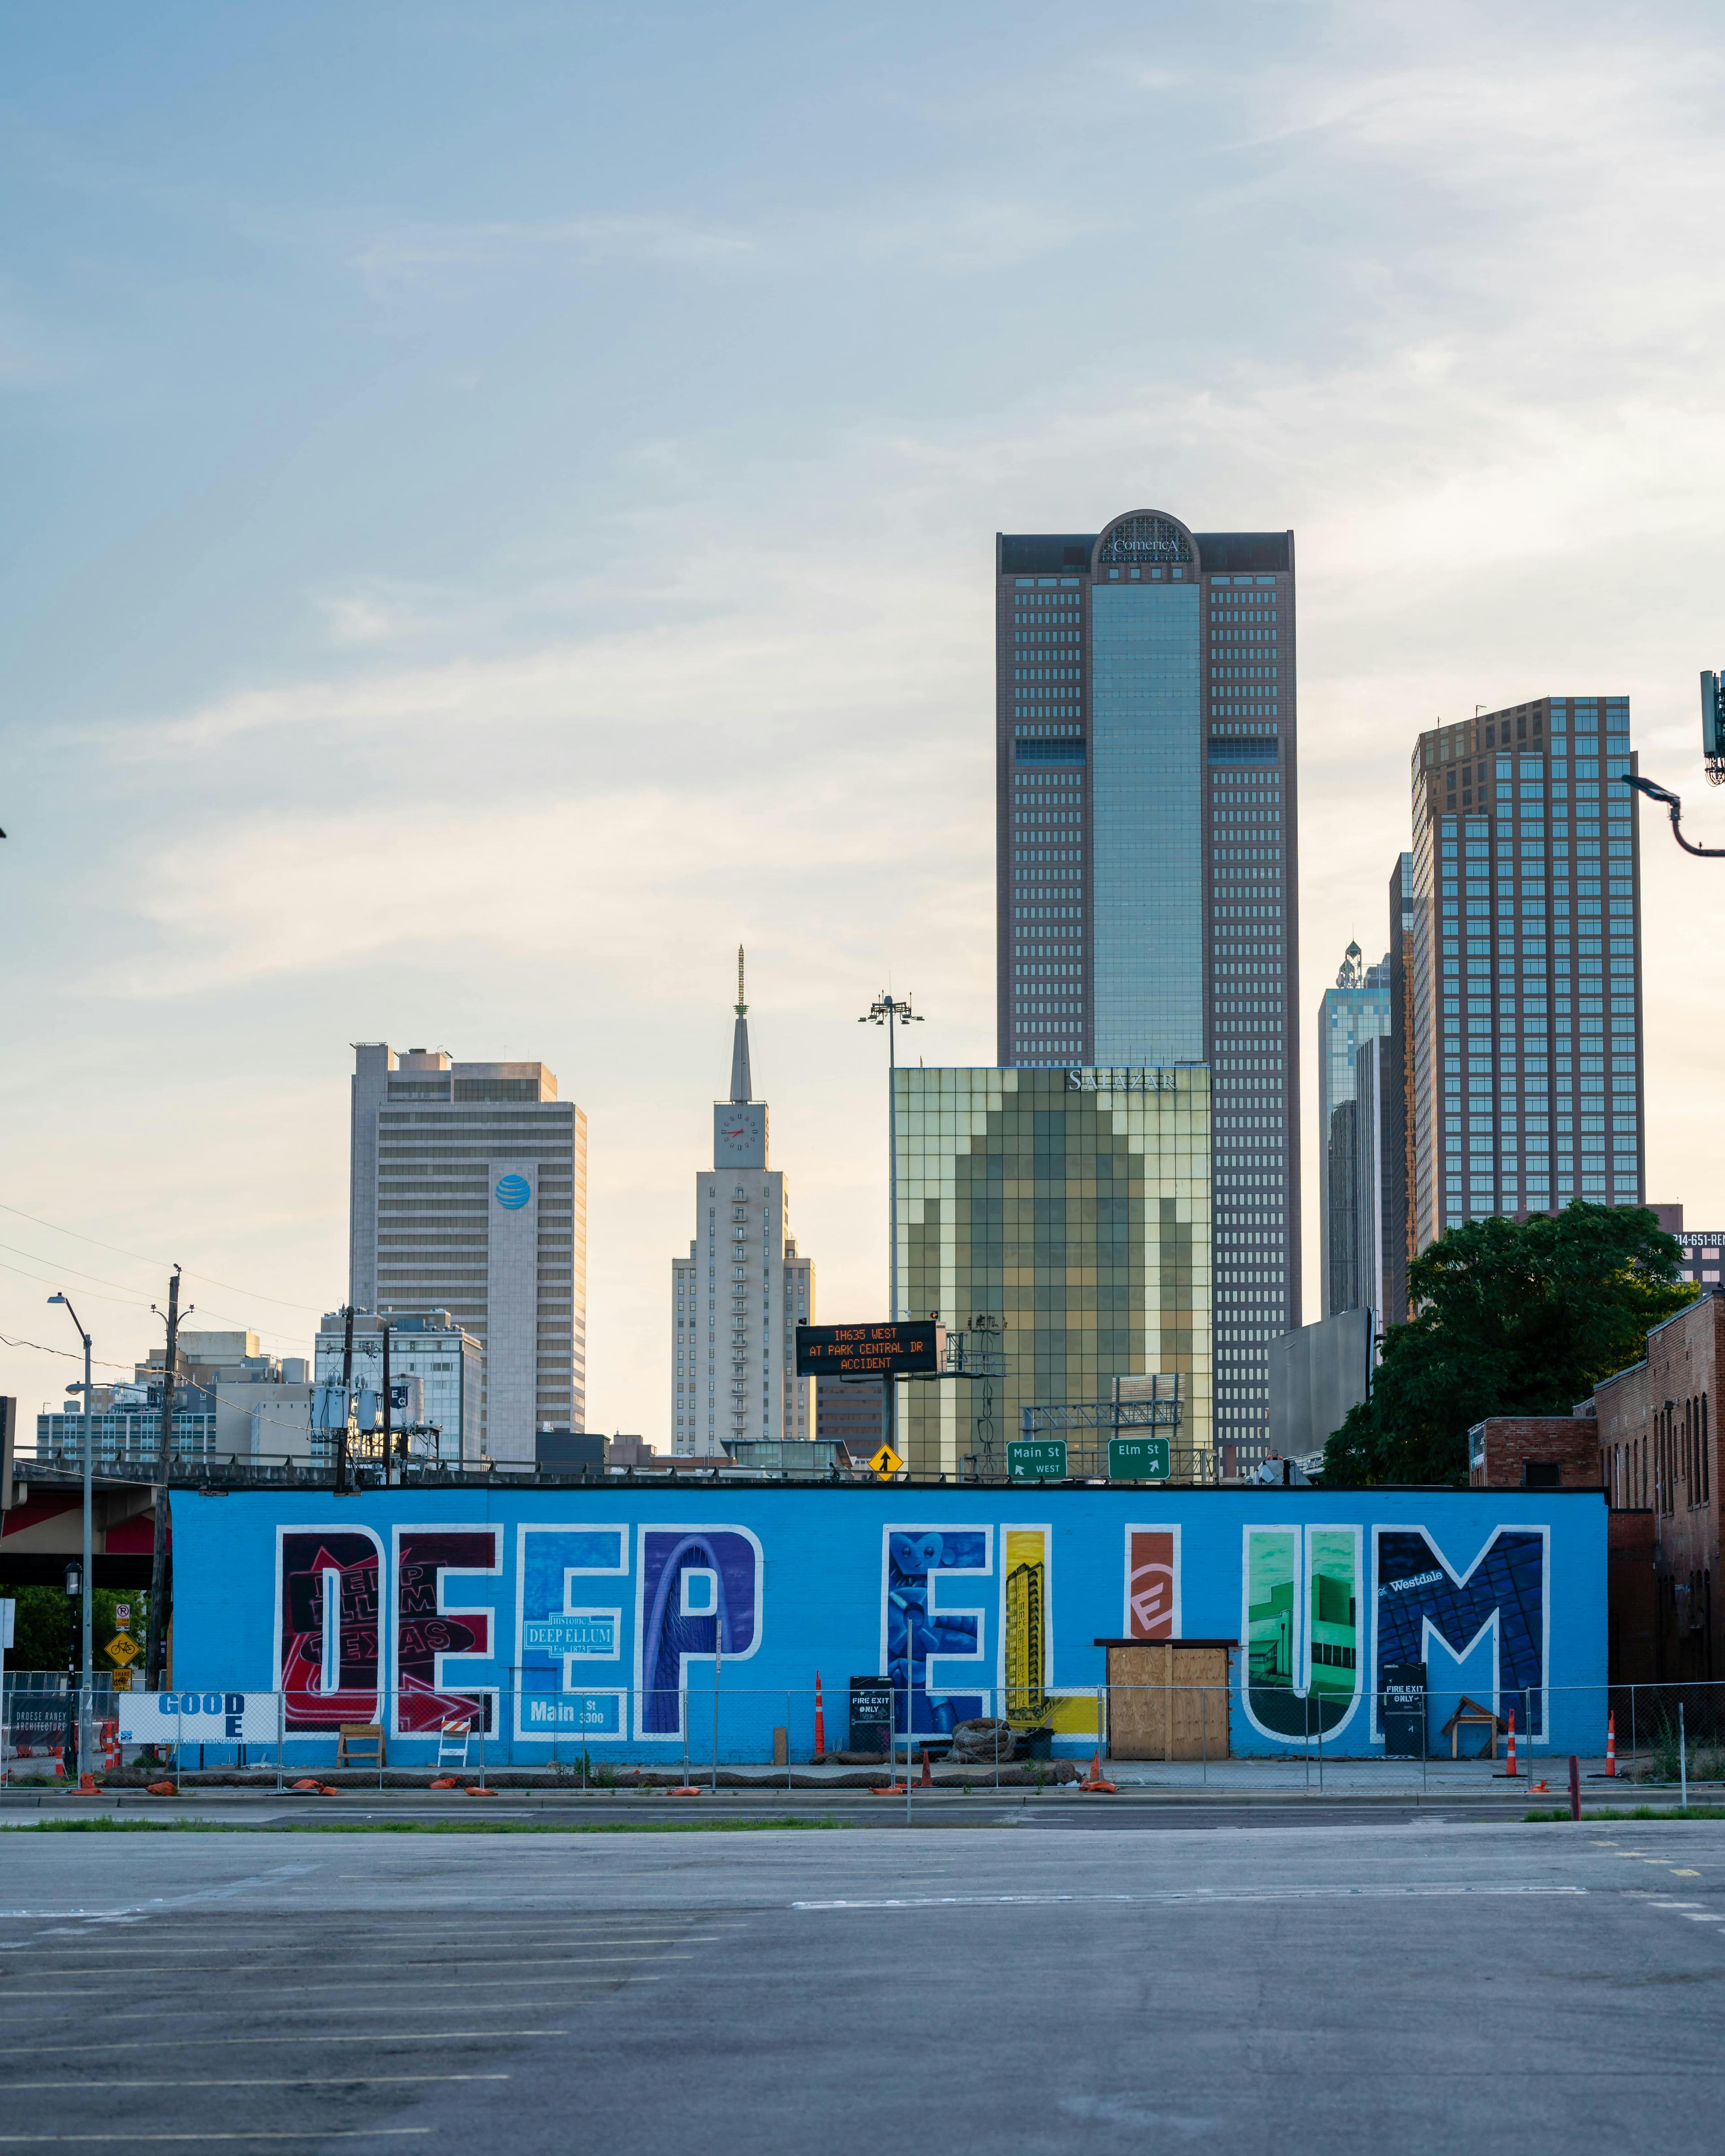 Bustling Deep Ellum neighborhood with colorful murals and street art.